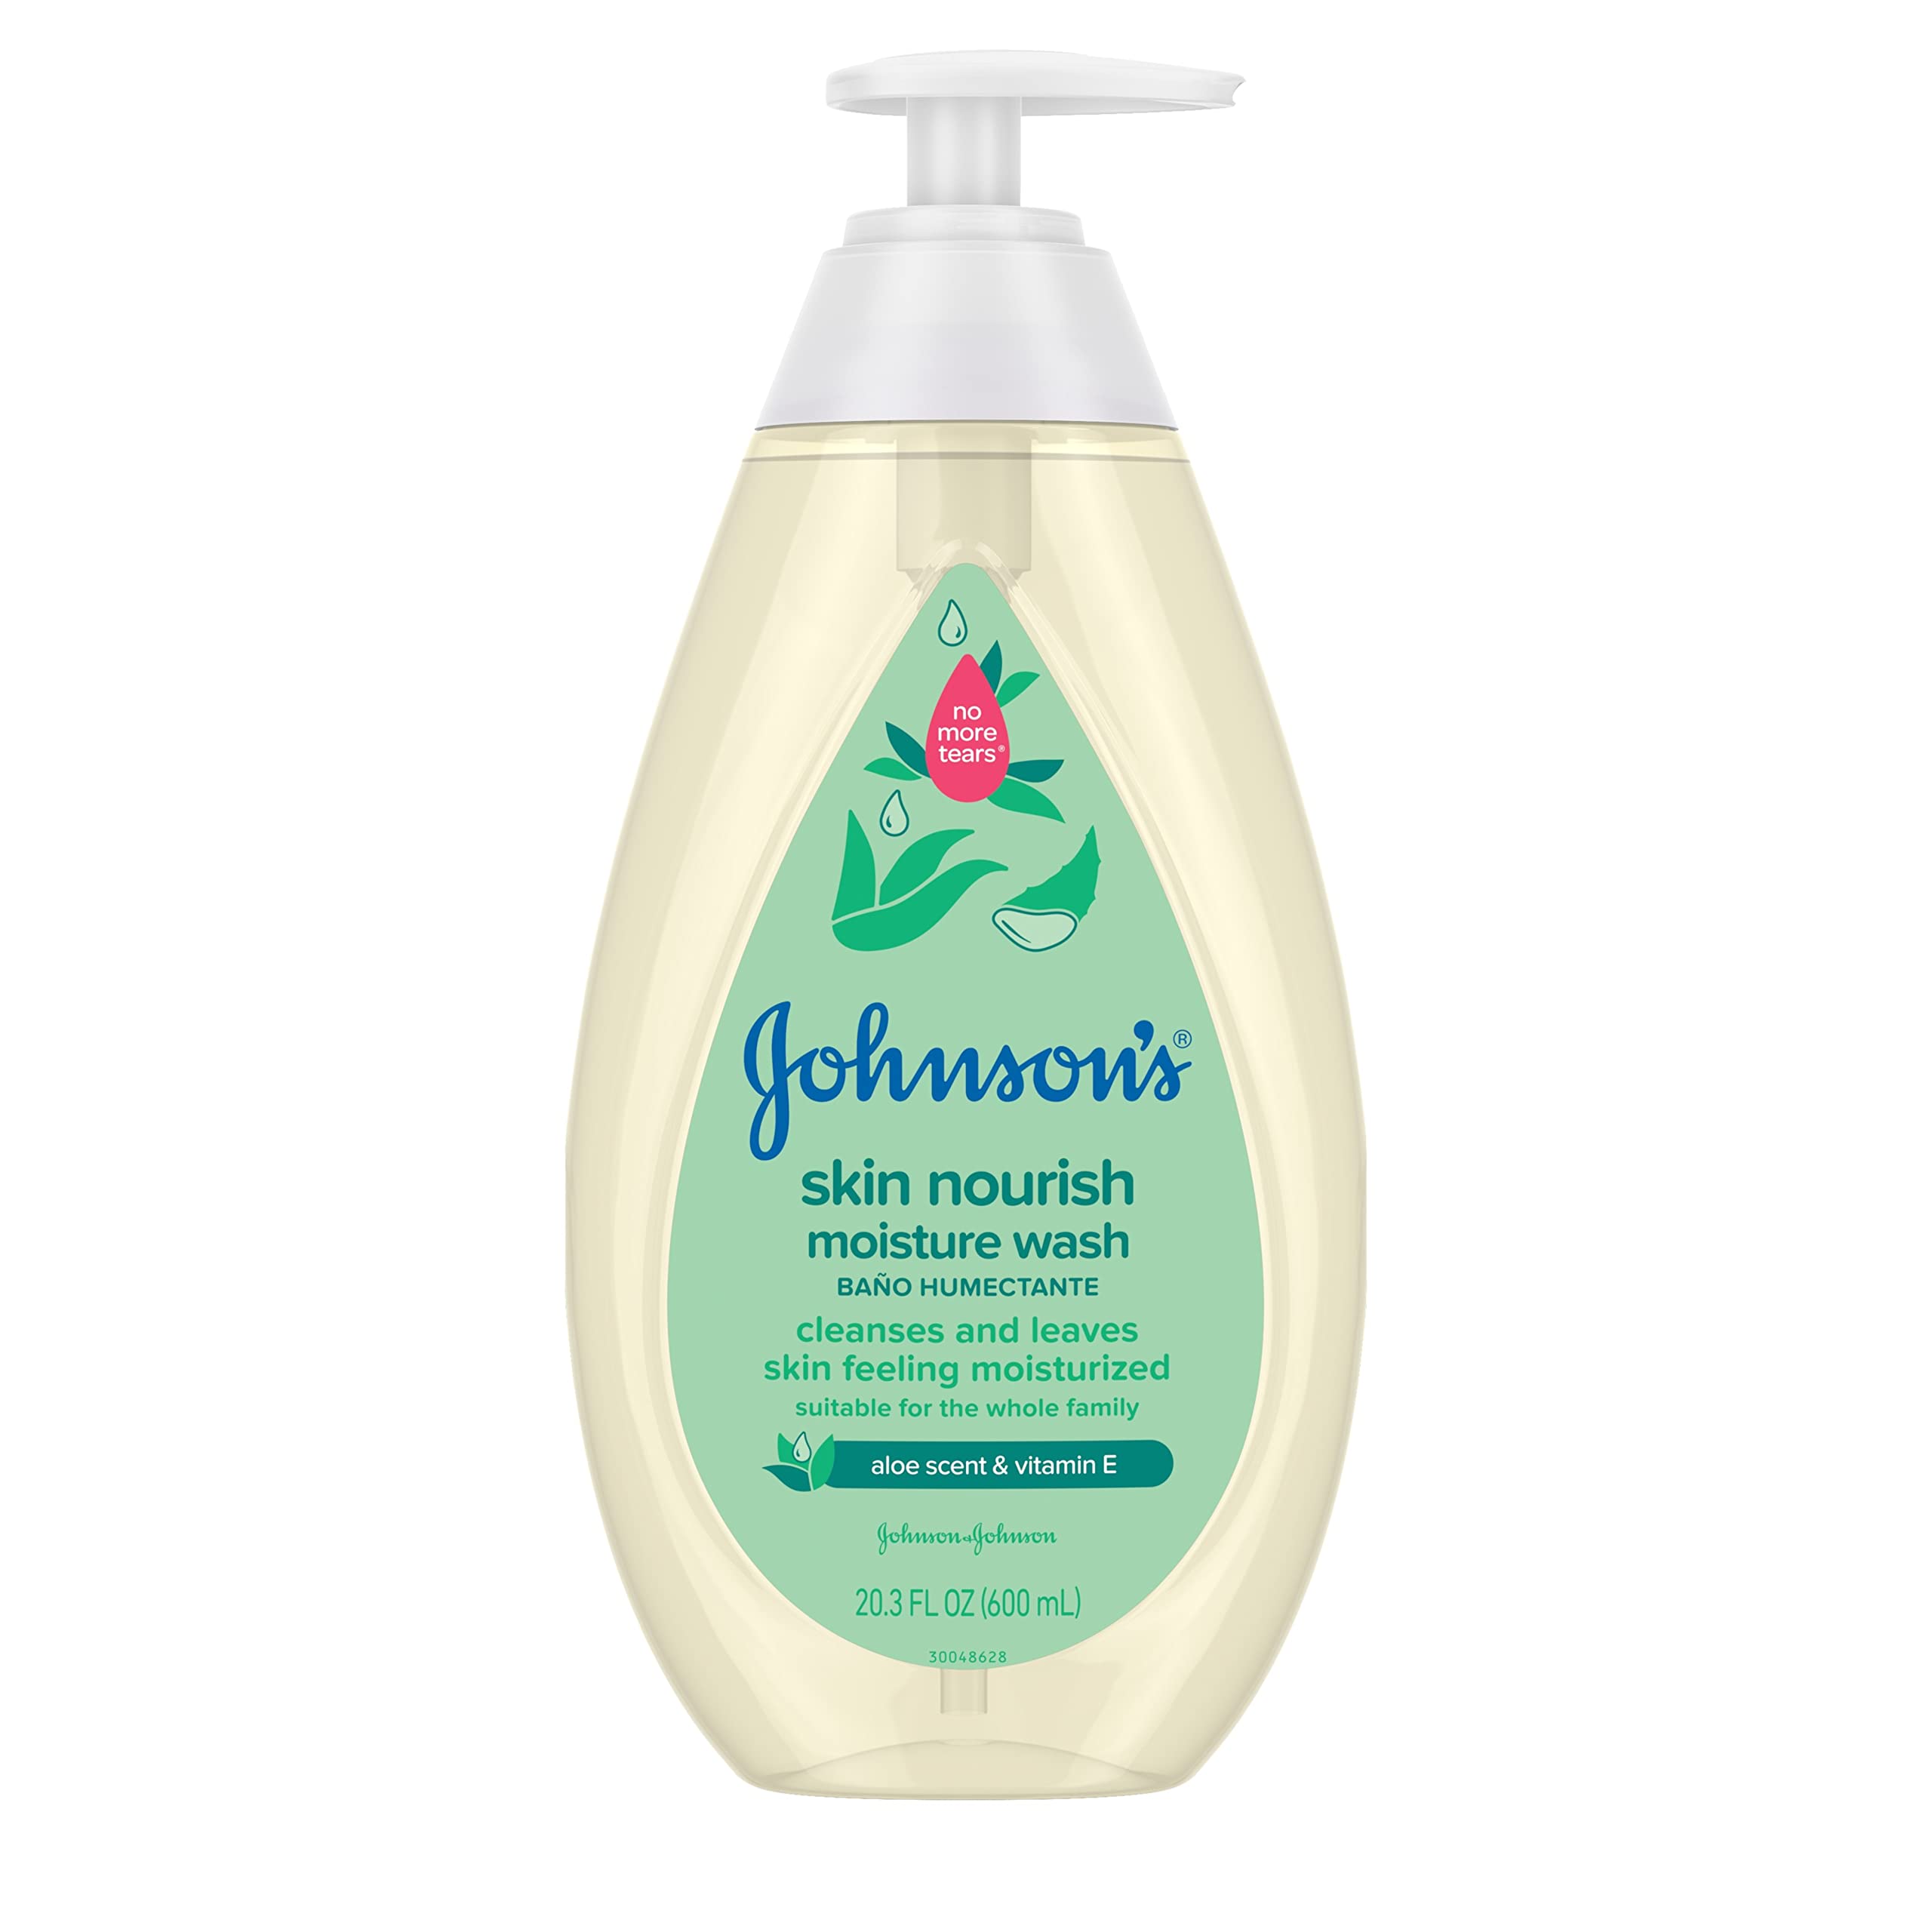 20.3 oz. Johnson's Baby Skin Nourishing Moisture Baby Body Wash  $4.79 + Free Shipping w/ Prime or on $35+